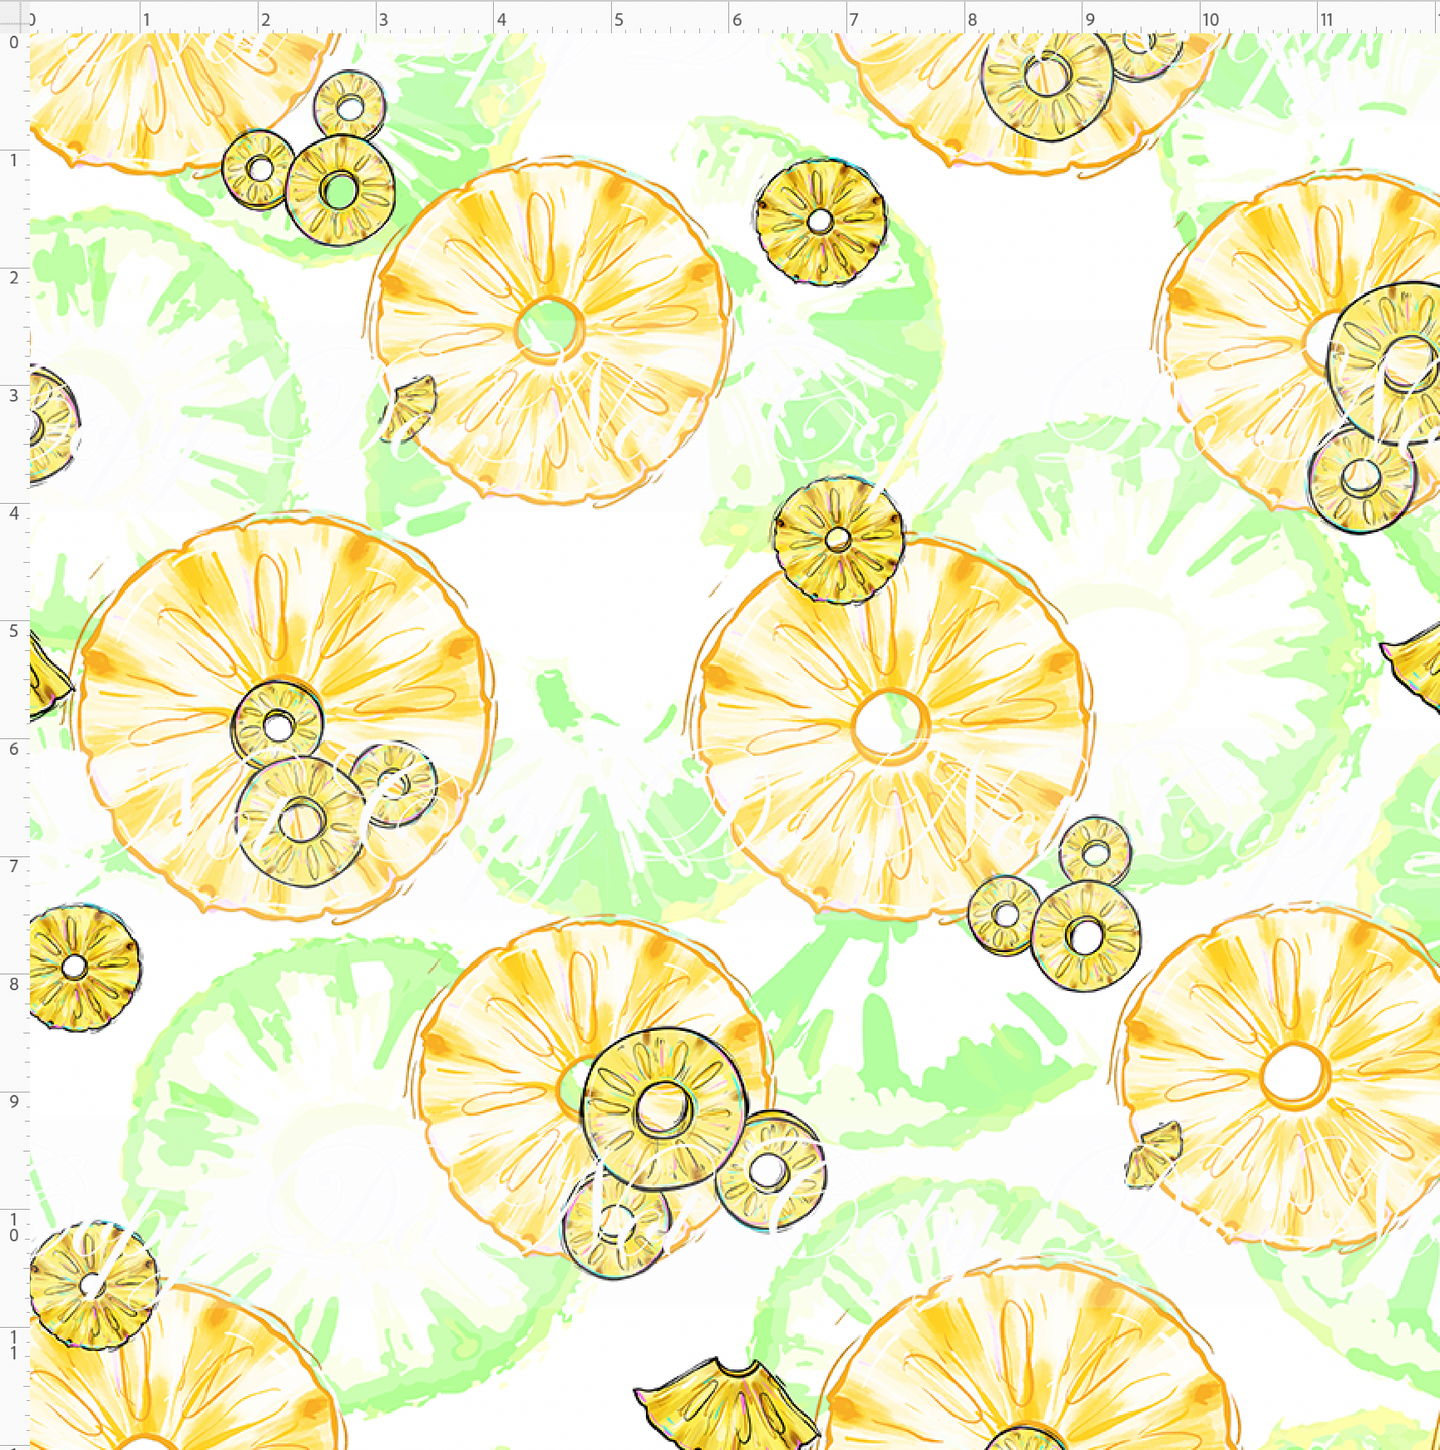 Retail - Minnie Pineapple - Background